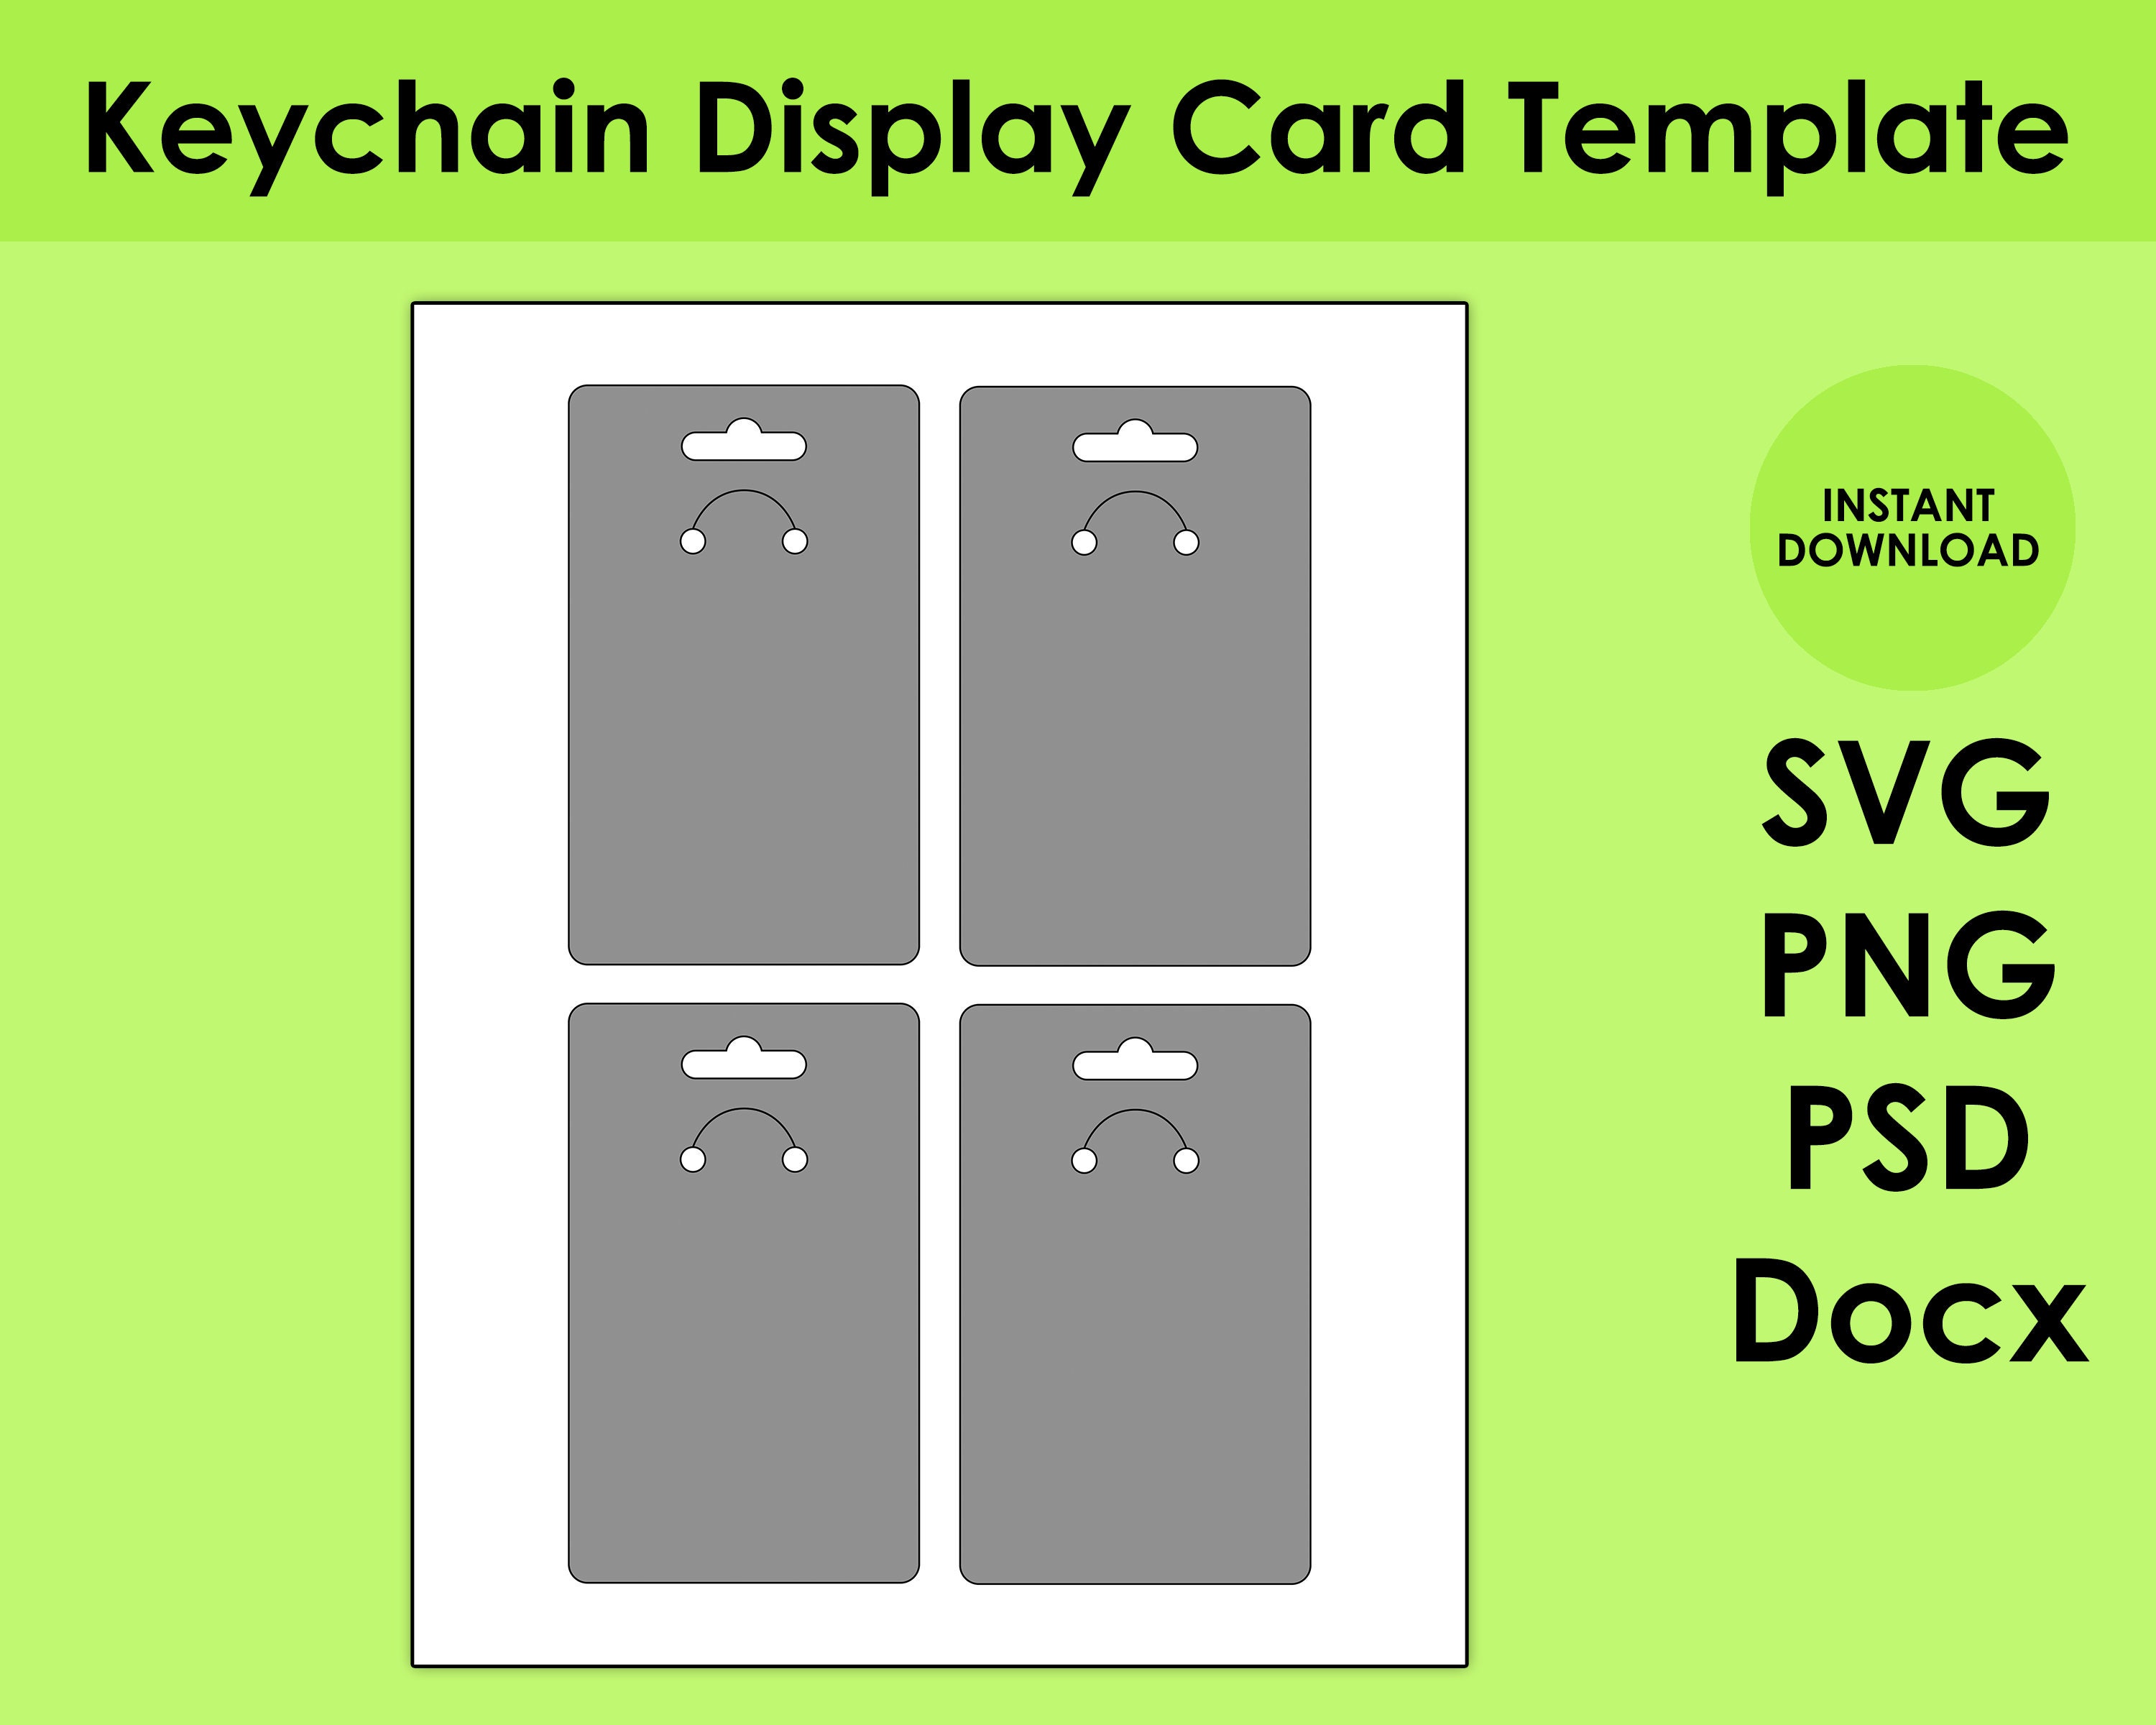 Keychain Display Card Template